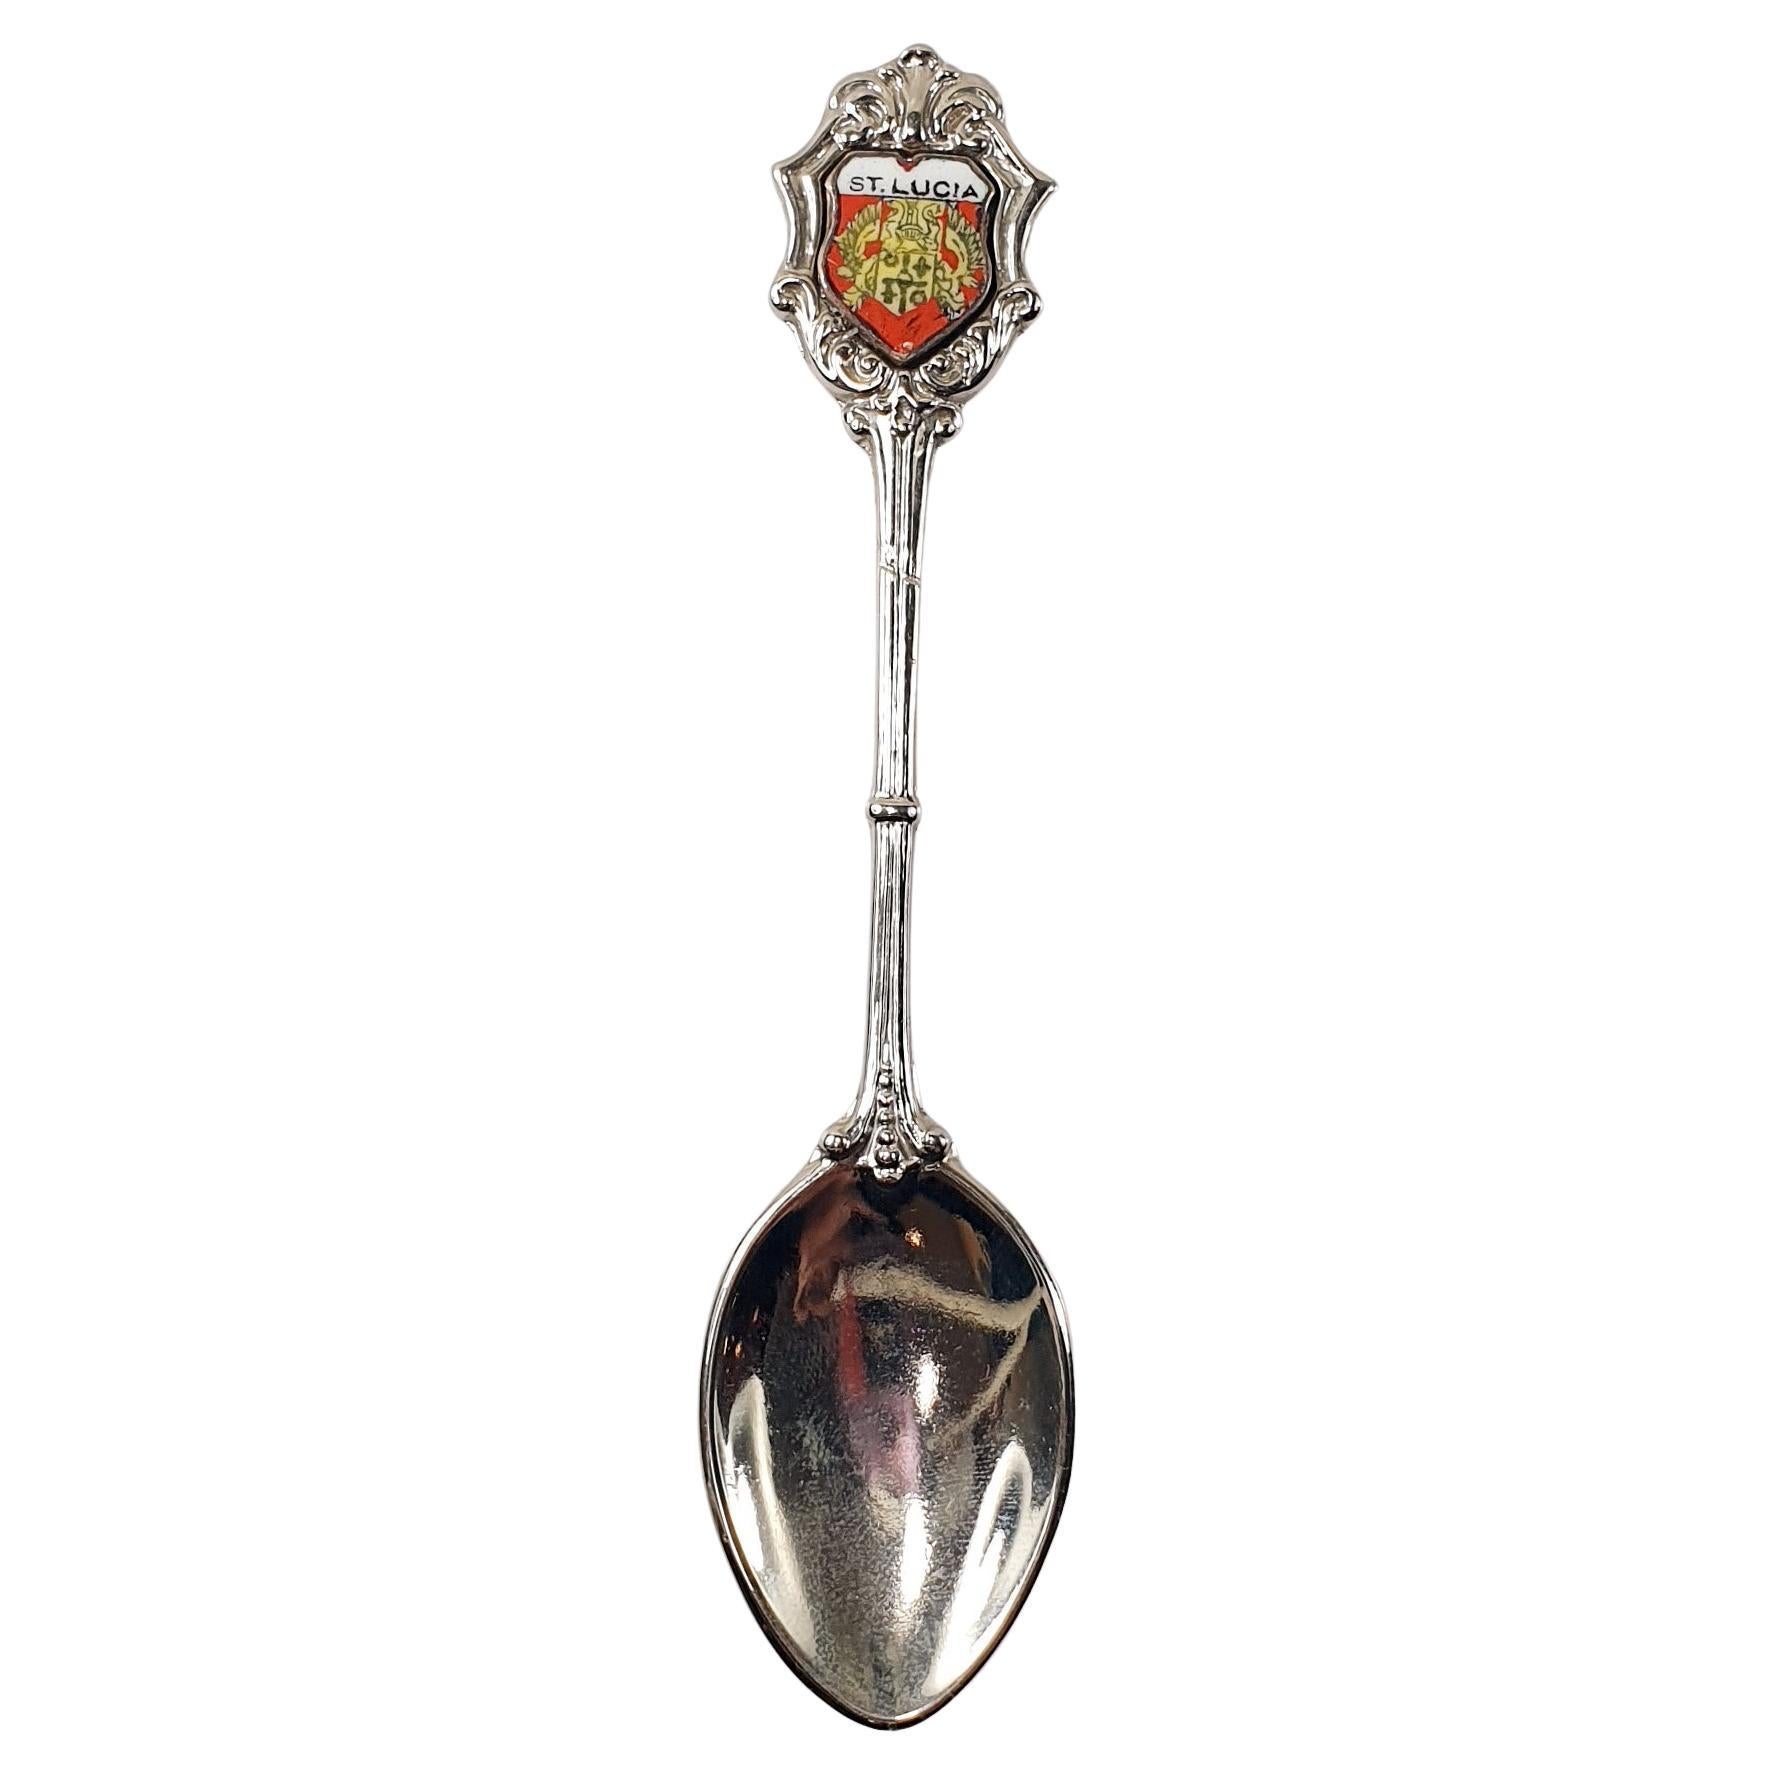 St. Lucia Souvenir Collection Silver Teaspoon For Sale